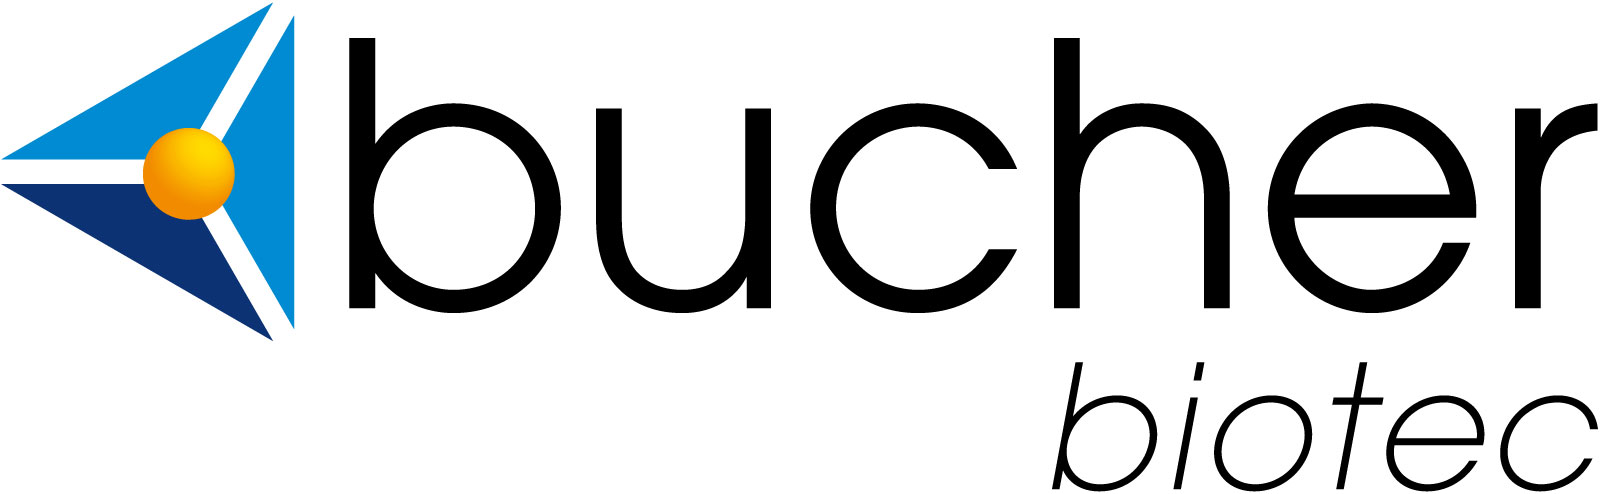 Bucher Biotech Logo